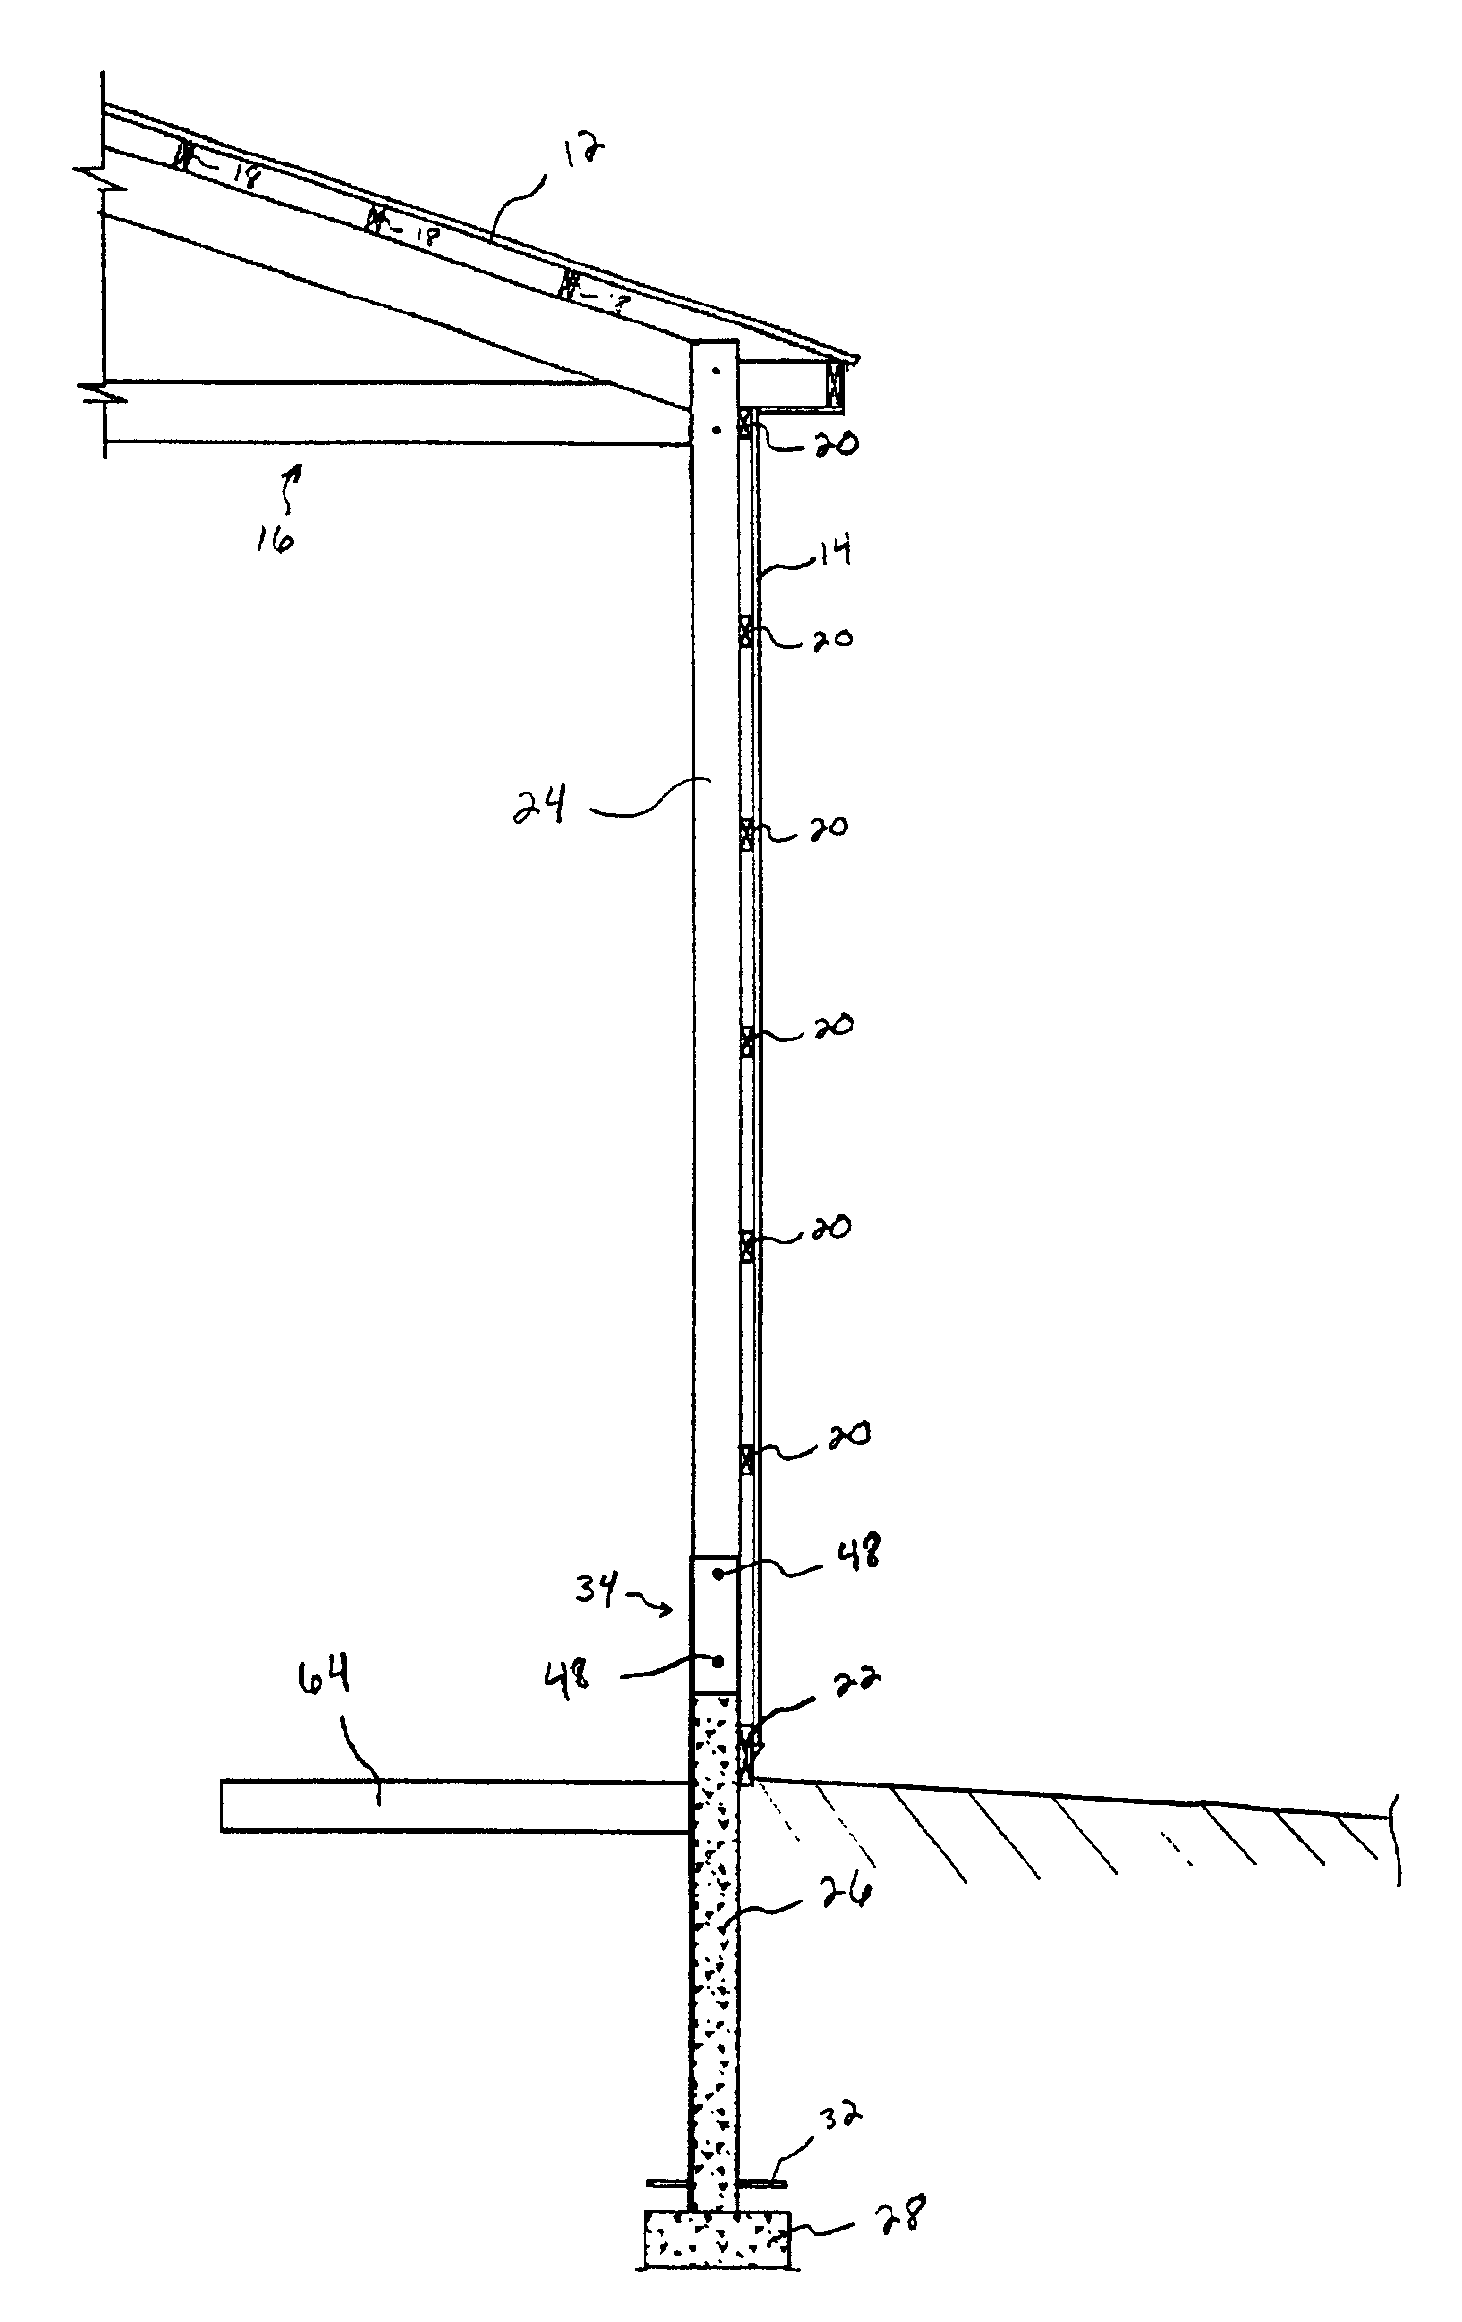 Precast concrete column for use in post-frame construction